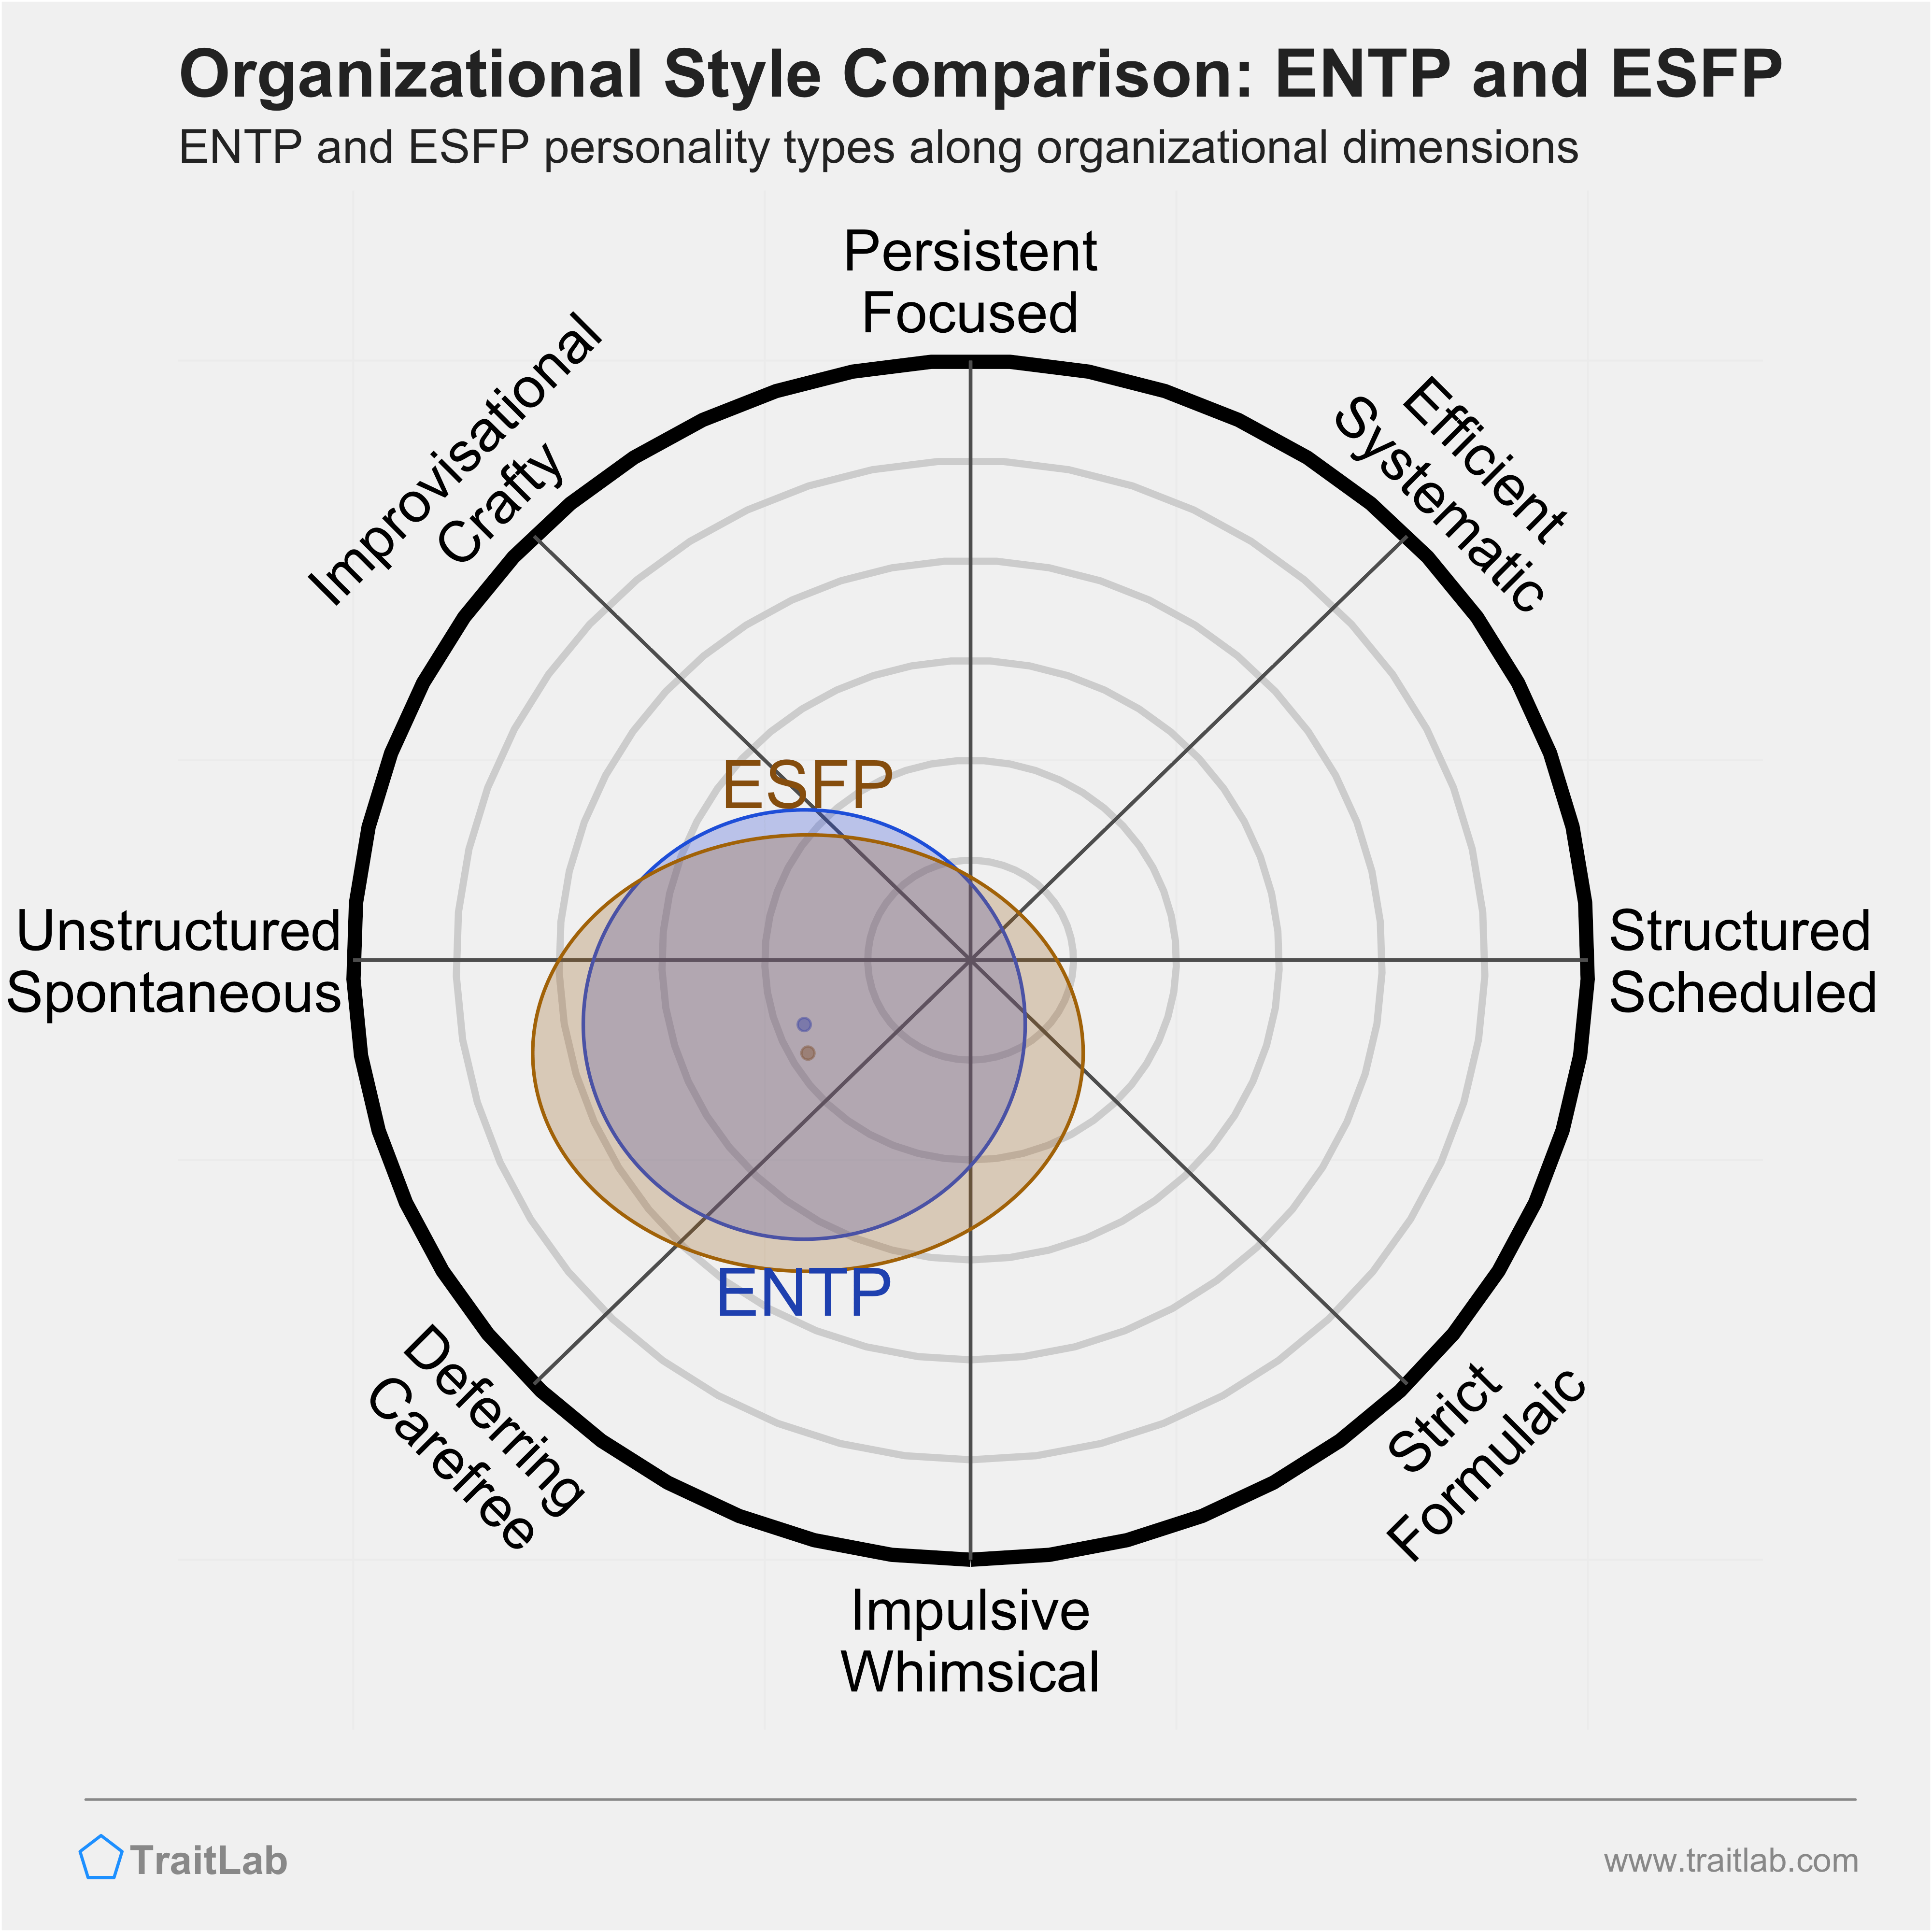 ENTP and ESFP comparison across organizational dimensions